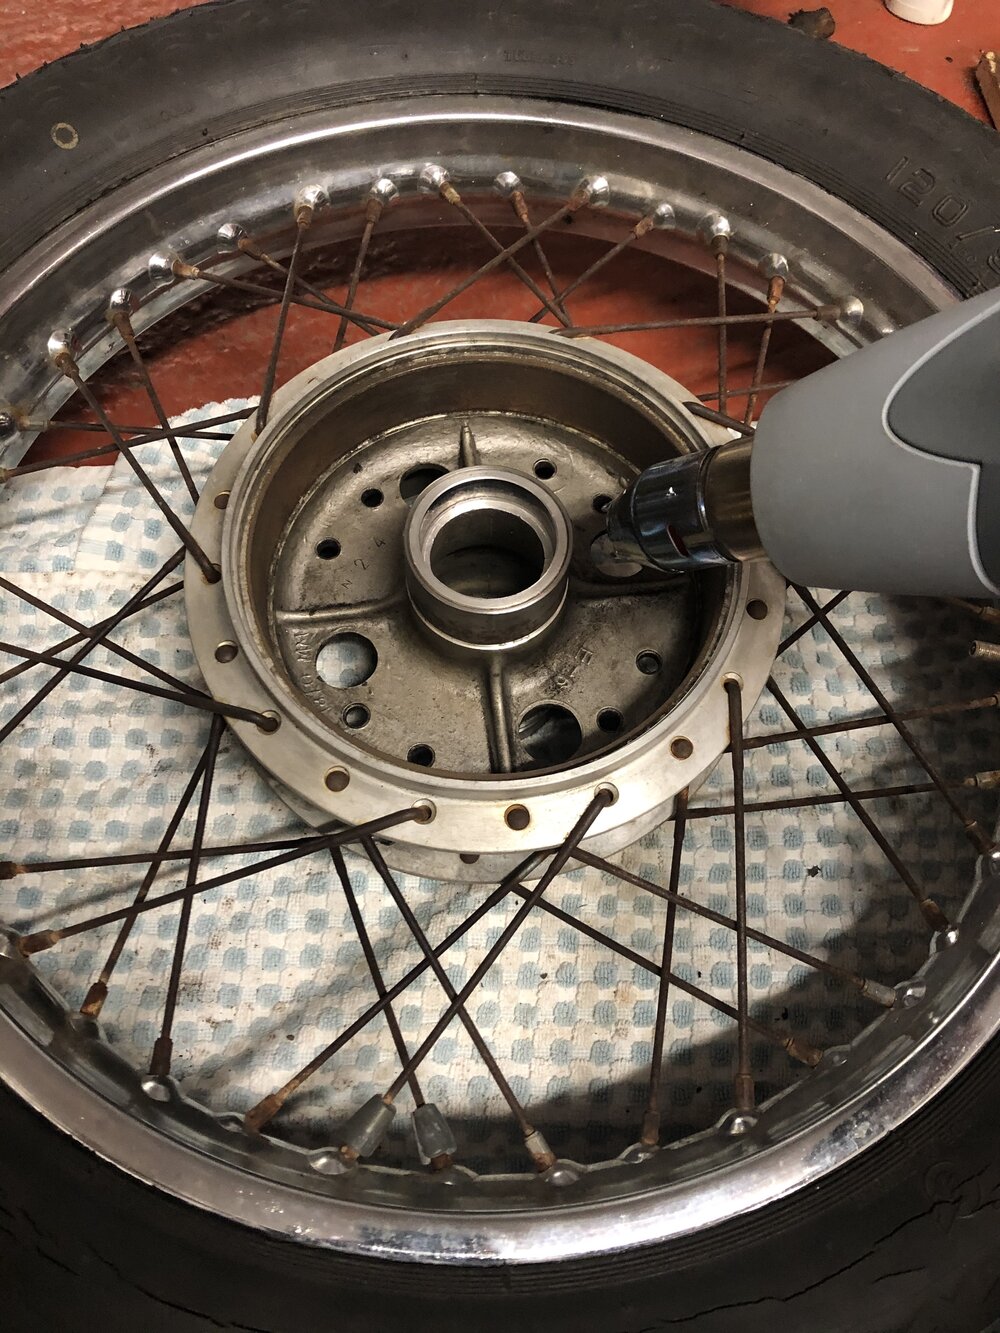 Mable Honda CB550 Cafe Racer rear wheel rebuild bearing heat the hub.jpg